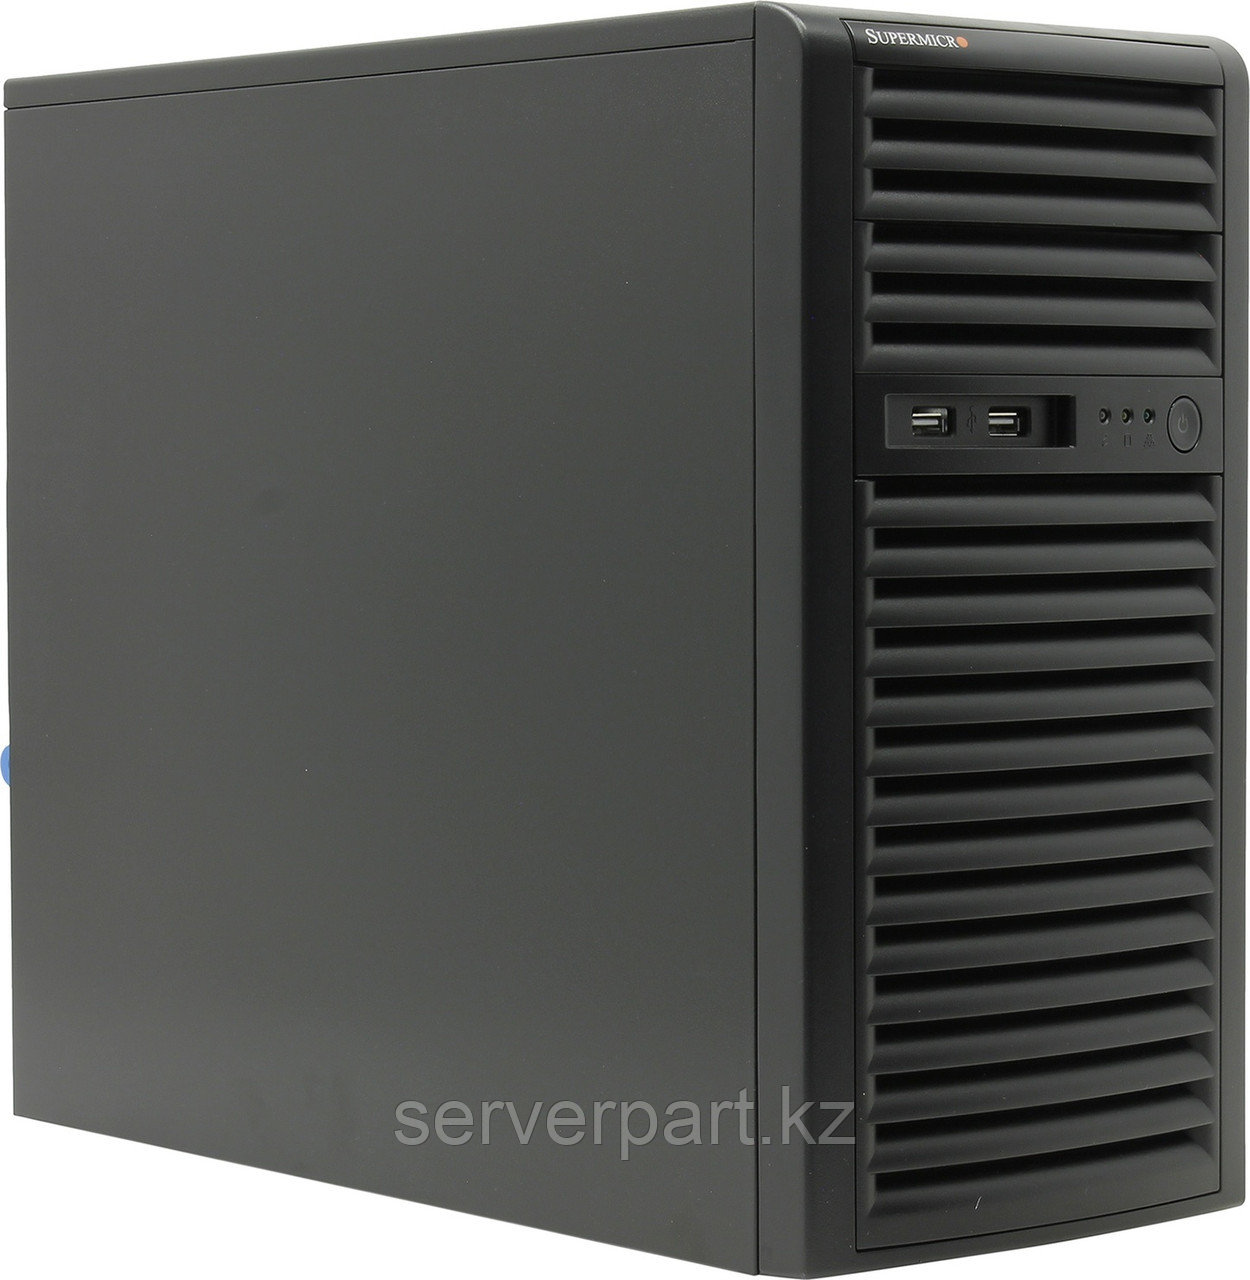 Сервер Supermicro SYS-5039D Tower/4-core intel xeon E3-1220v6 3GHz/16GB EUDIMM/1x480GB SSD DT Hyb